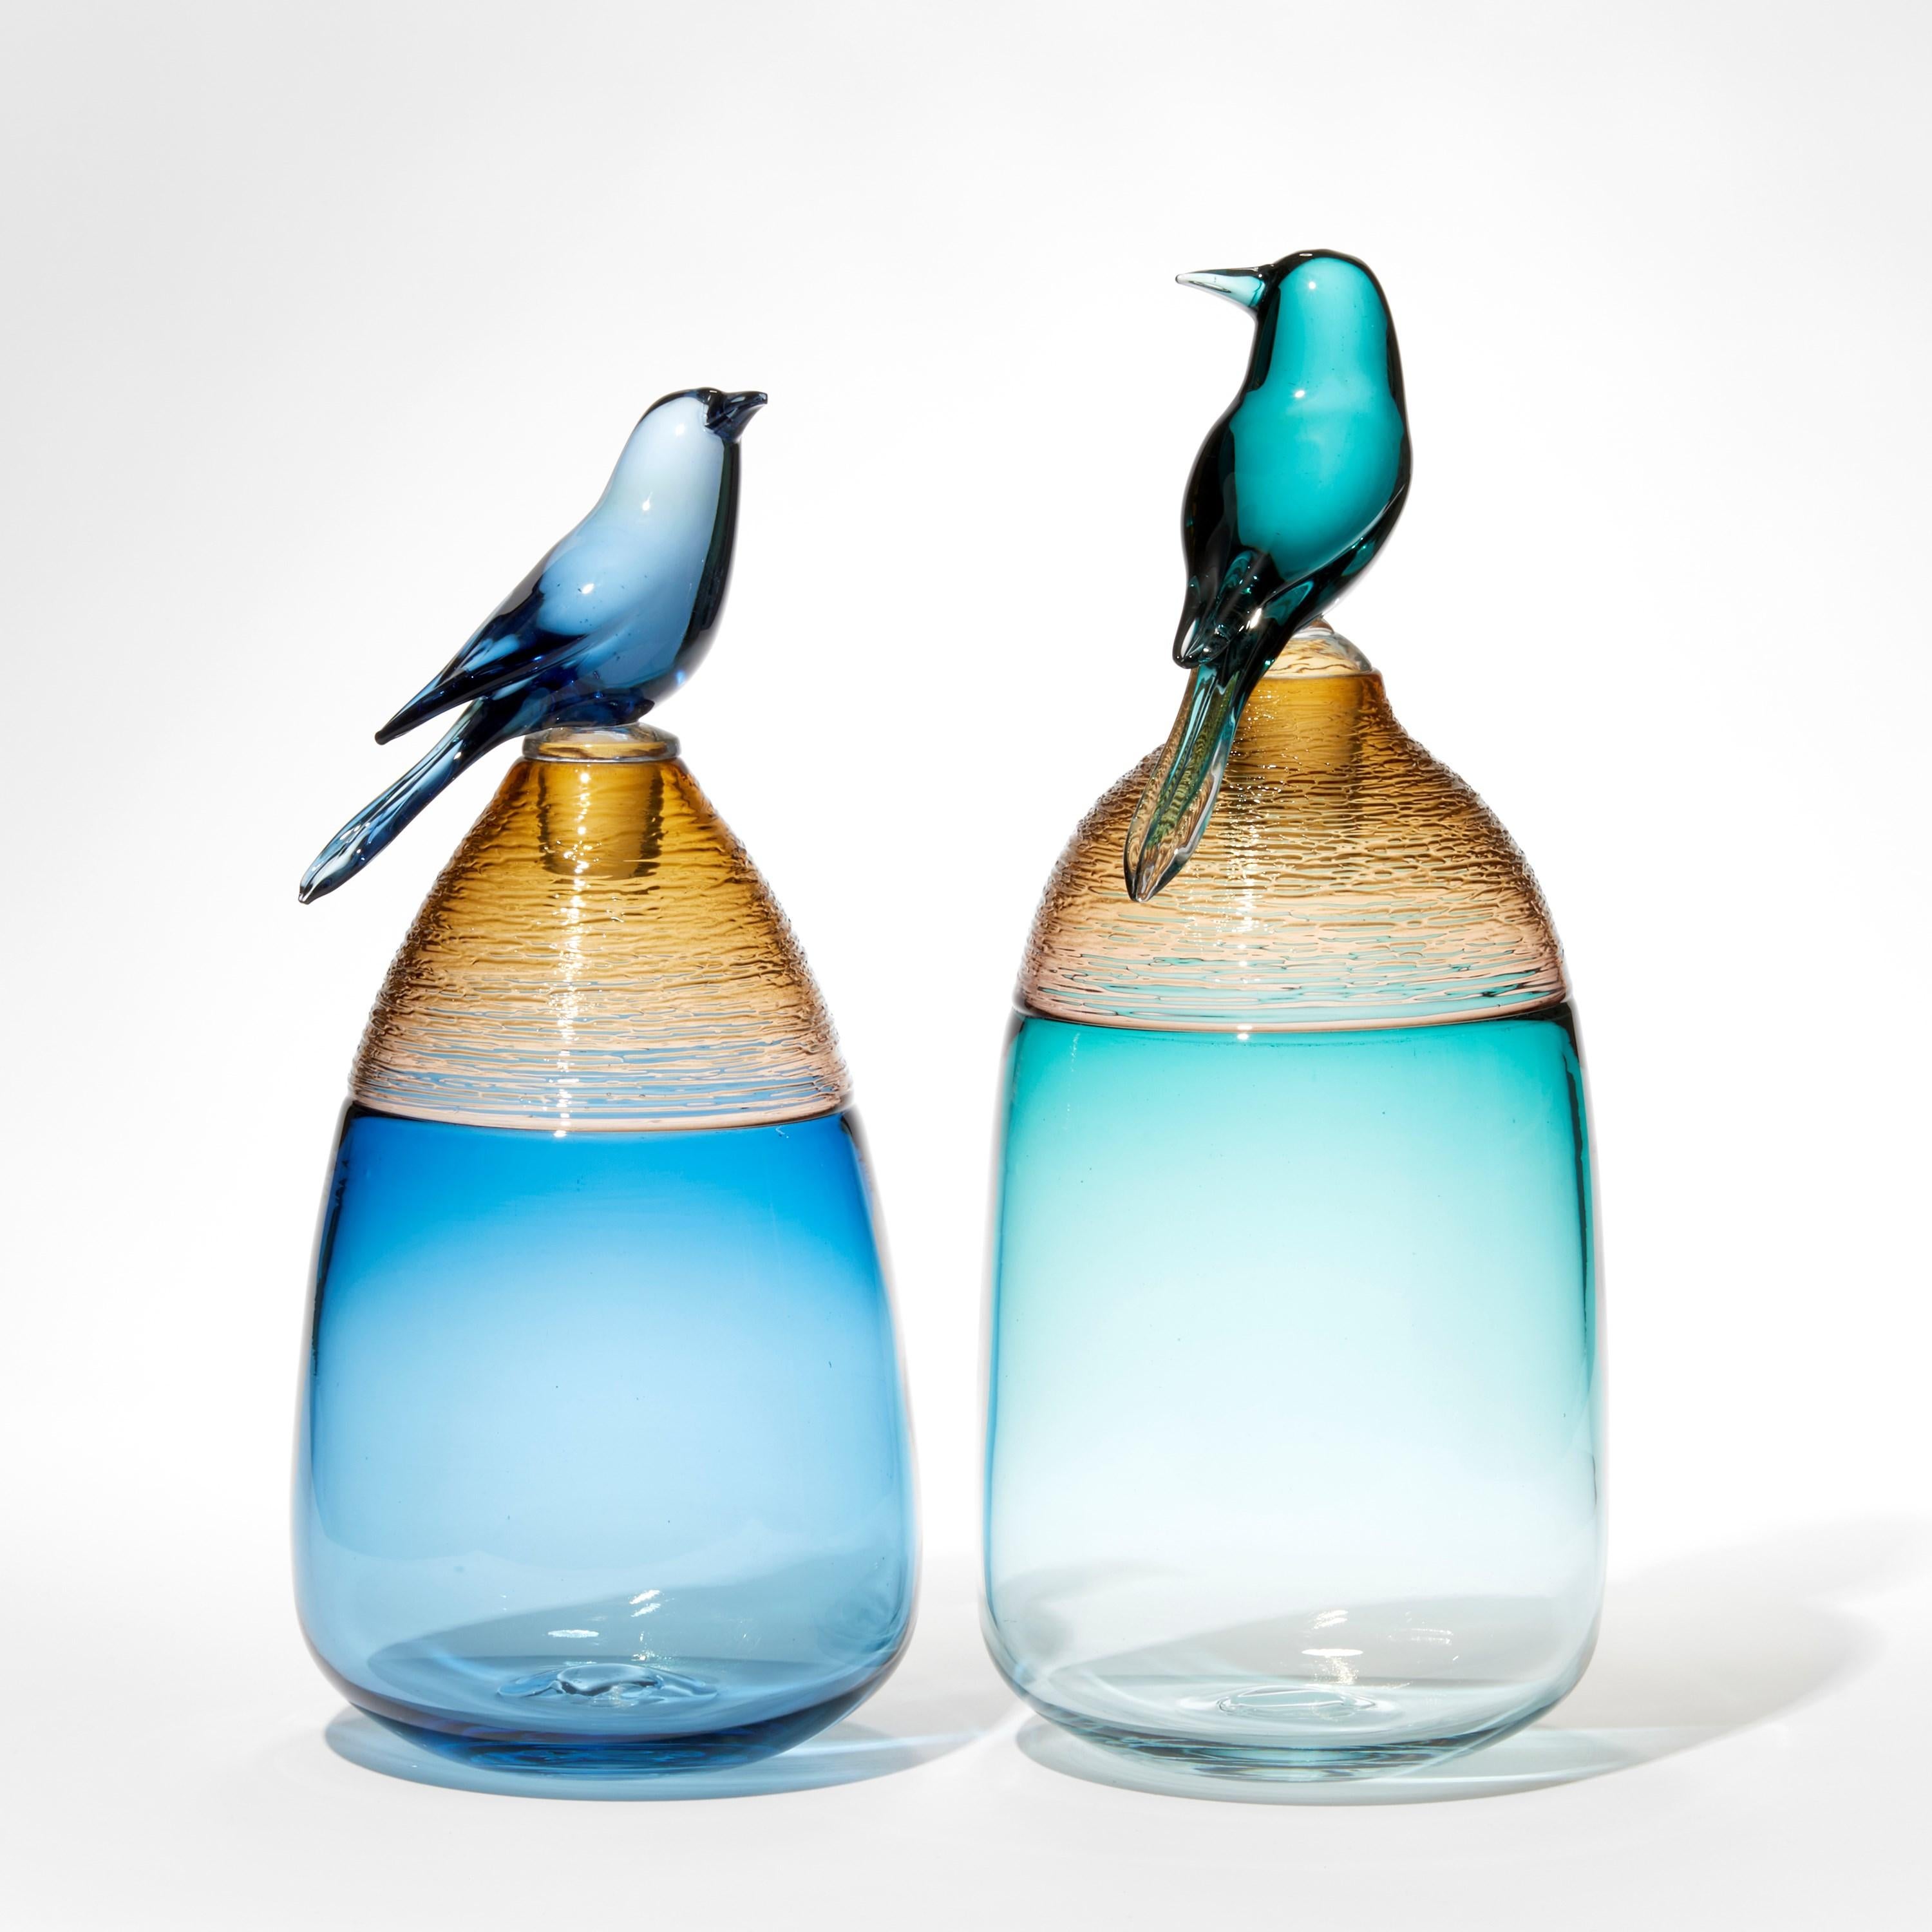 Hand-Crafted All About Birds XIX, blue & amber glass bird themed sculpture by Julie Johnson